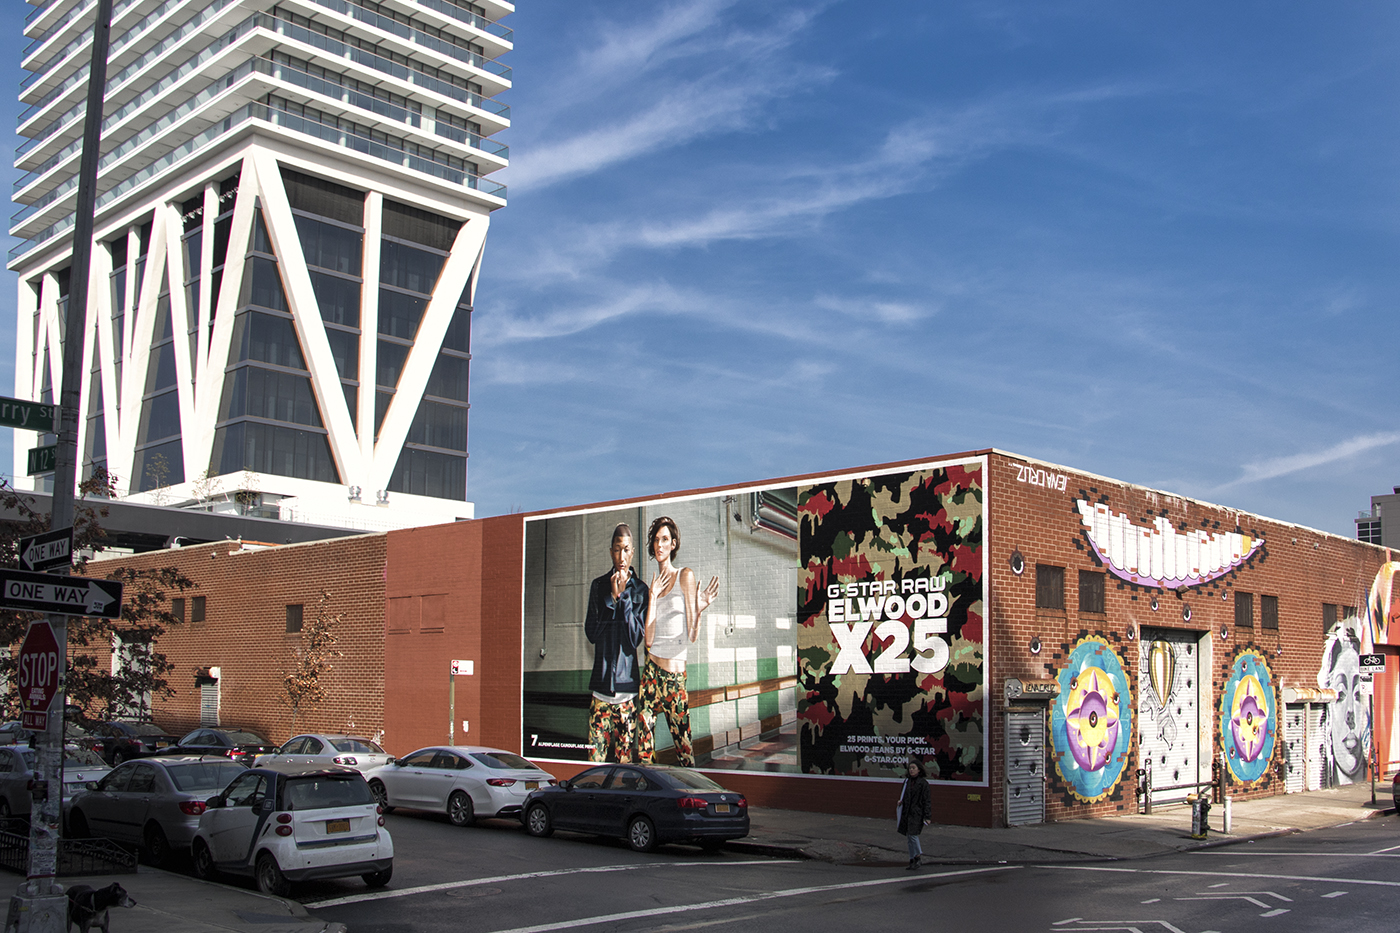 colossal-media-paint-ads-outdoor-advertising-billboard-nyc-new-york-brooklyn-g-star-pharrell-williams-2